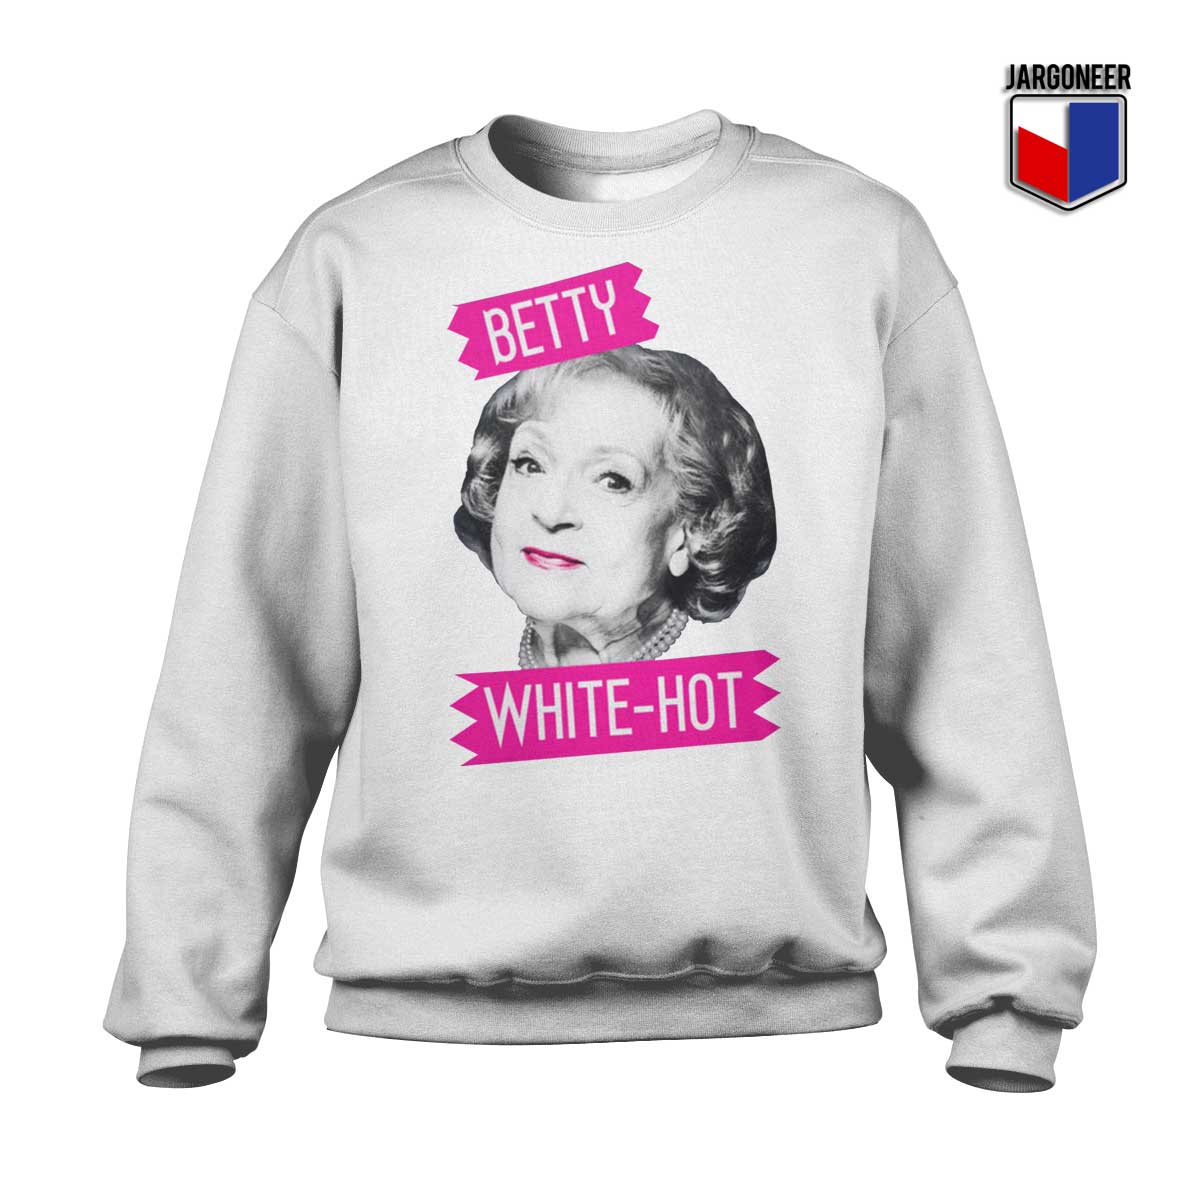 Betty White Hot White Sweatshirt - Shop Unique Graphic Cool Shirt Designs